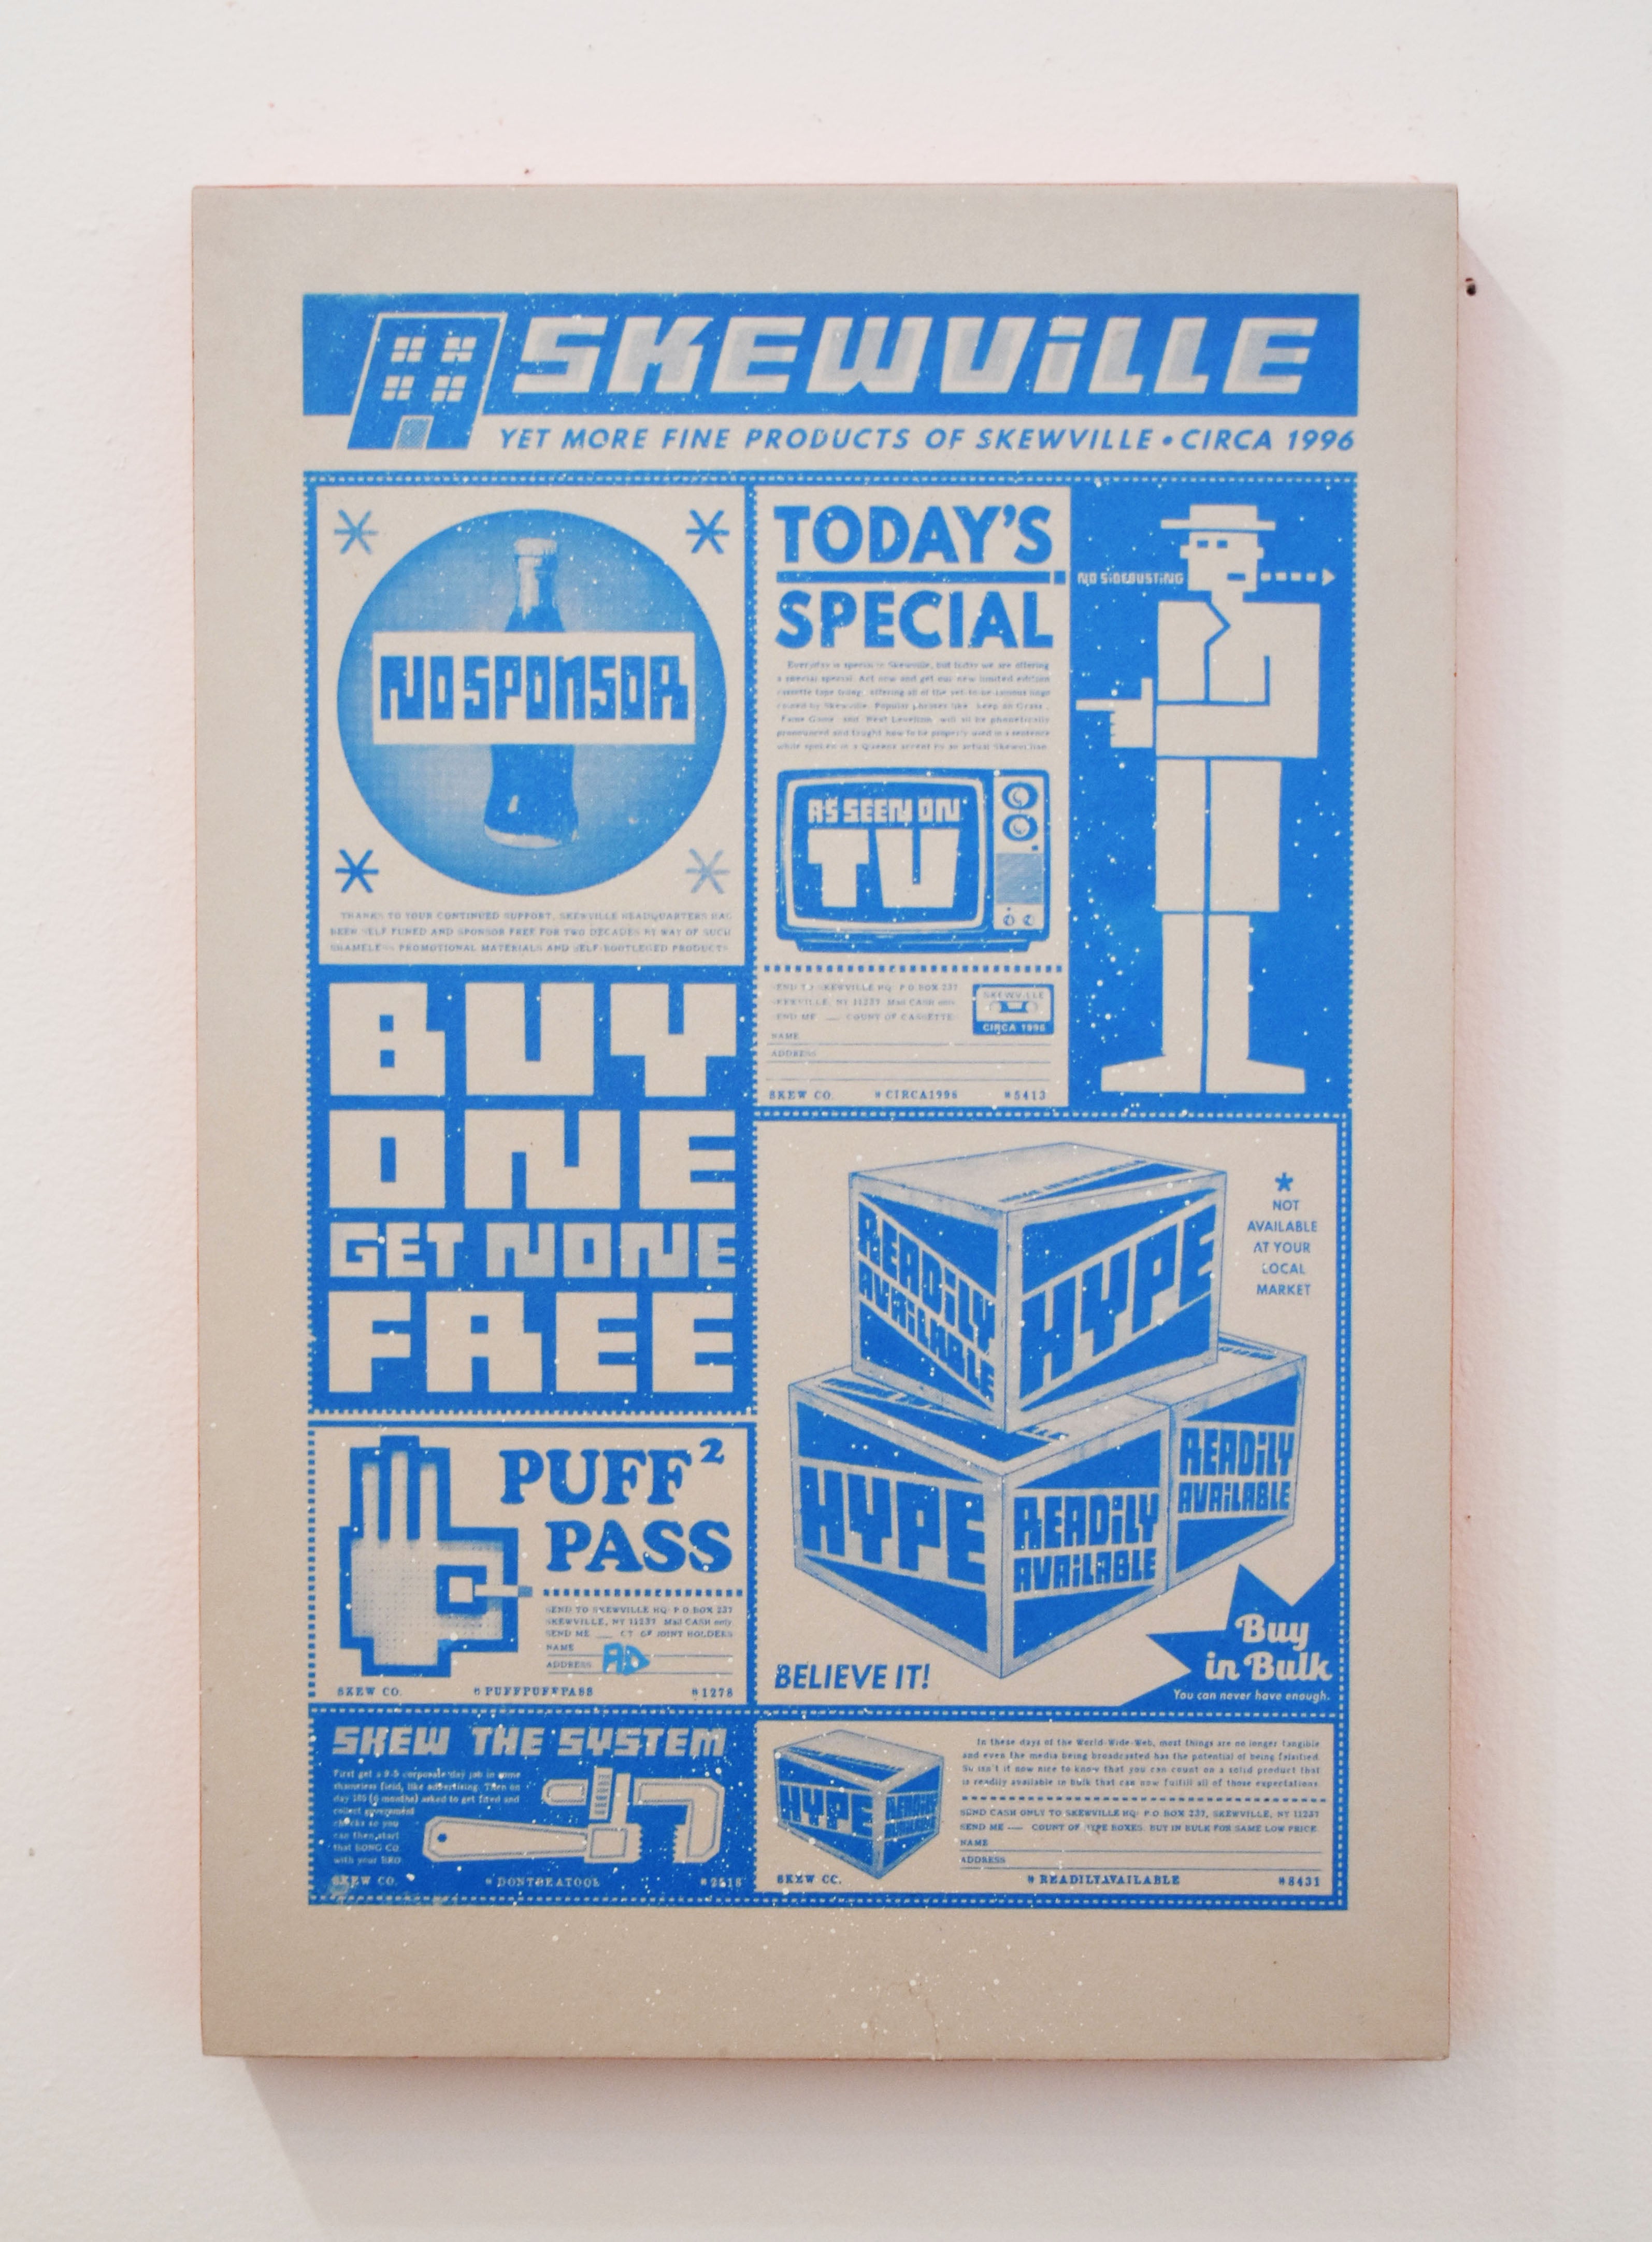 "No Sponsor" by Skewville